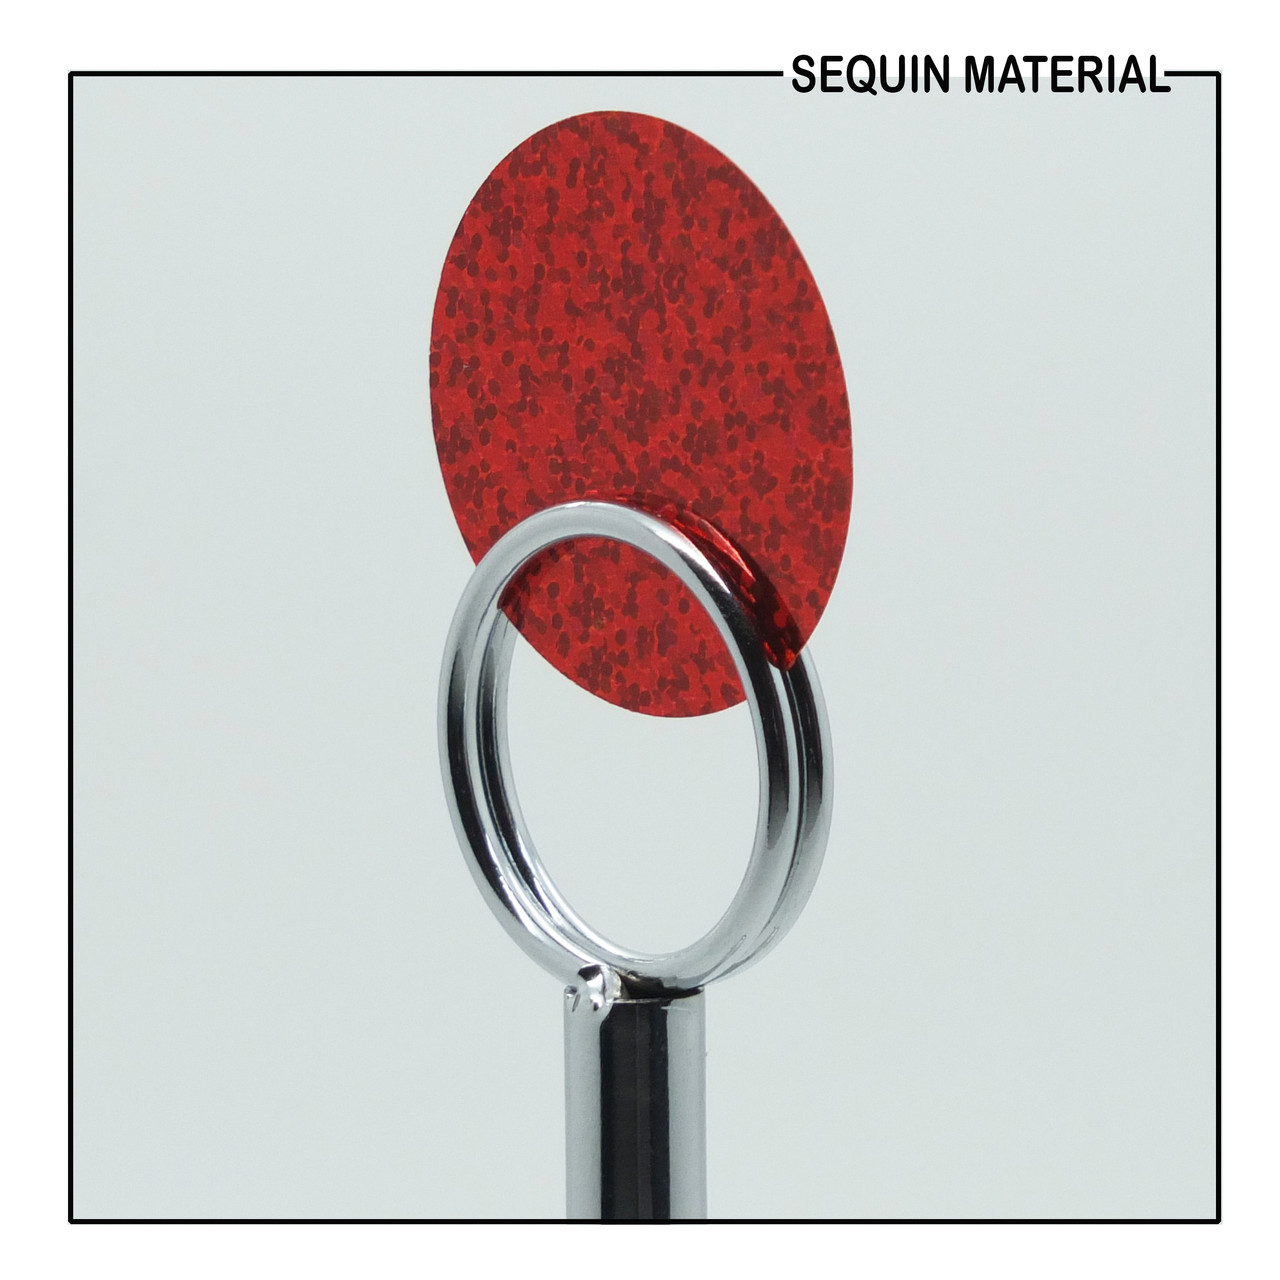 SequinsUSA Red Hologram Glitter Sparkle Metallic Sequin Material RL062